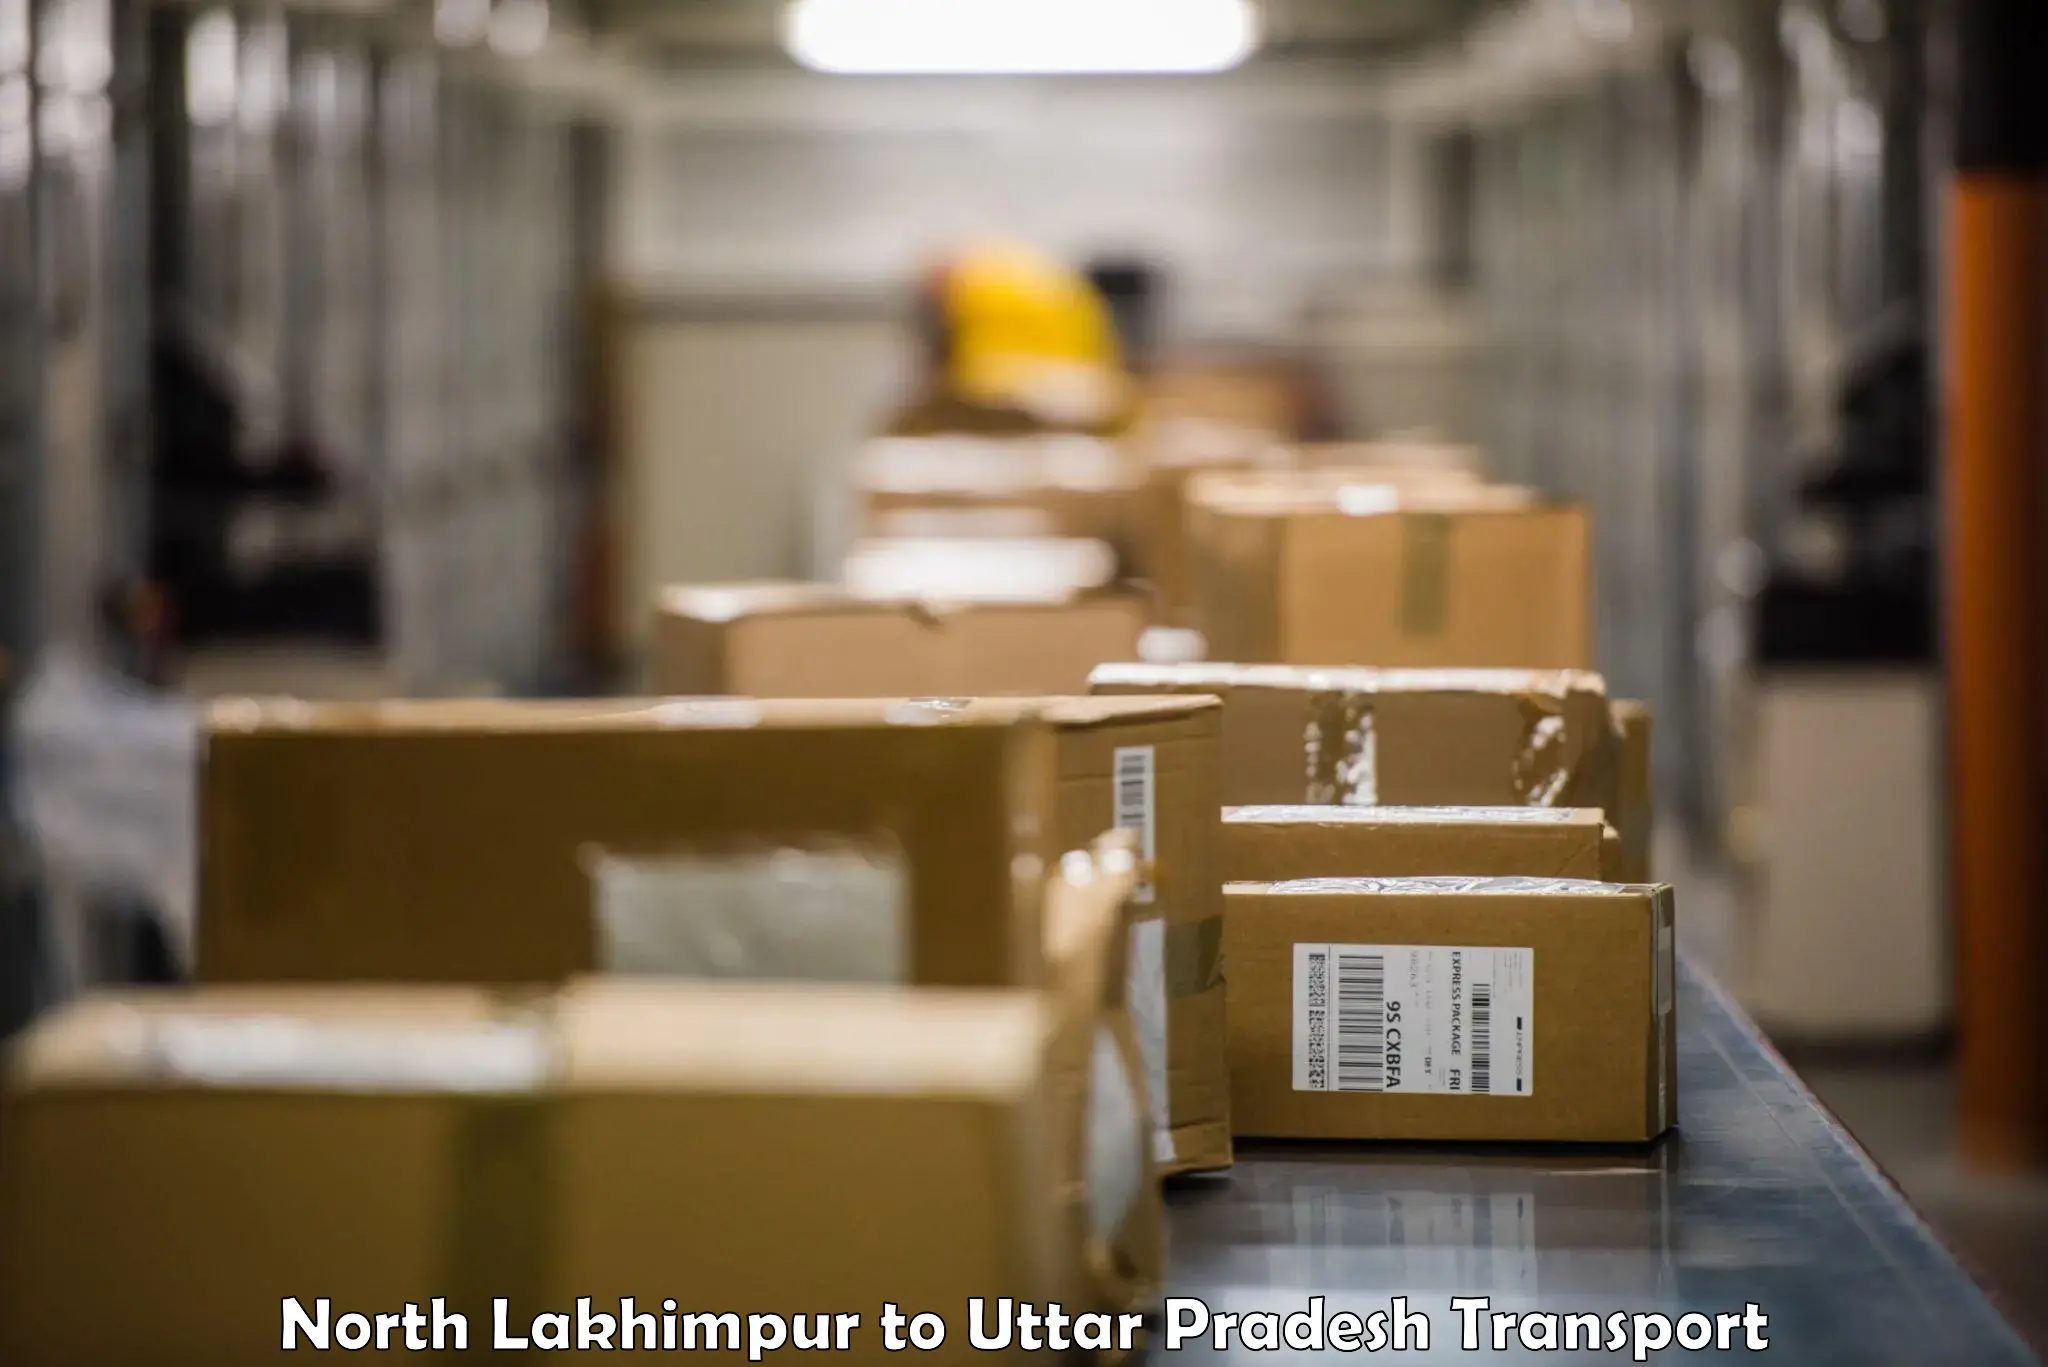 Intercity goods transport in North Lakhimpur to Anupshahar